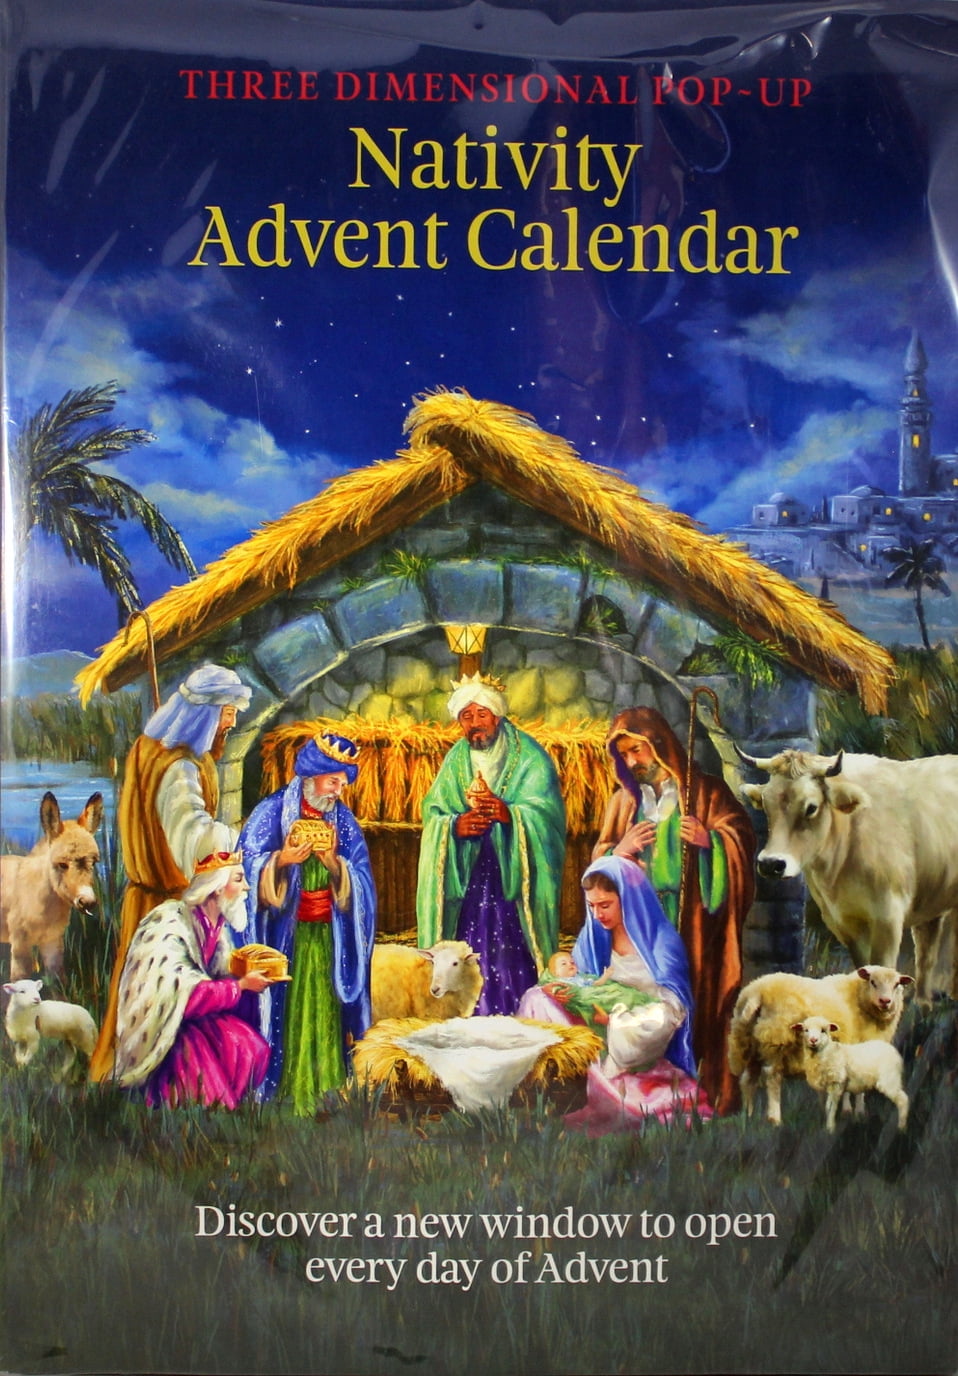 Nativity Advent Calendar 3 Dimensional PopUp NEW Christmas New Window